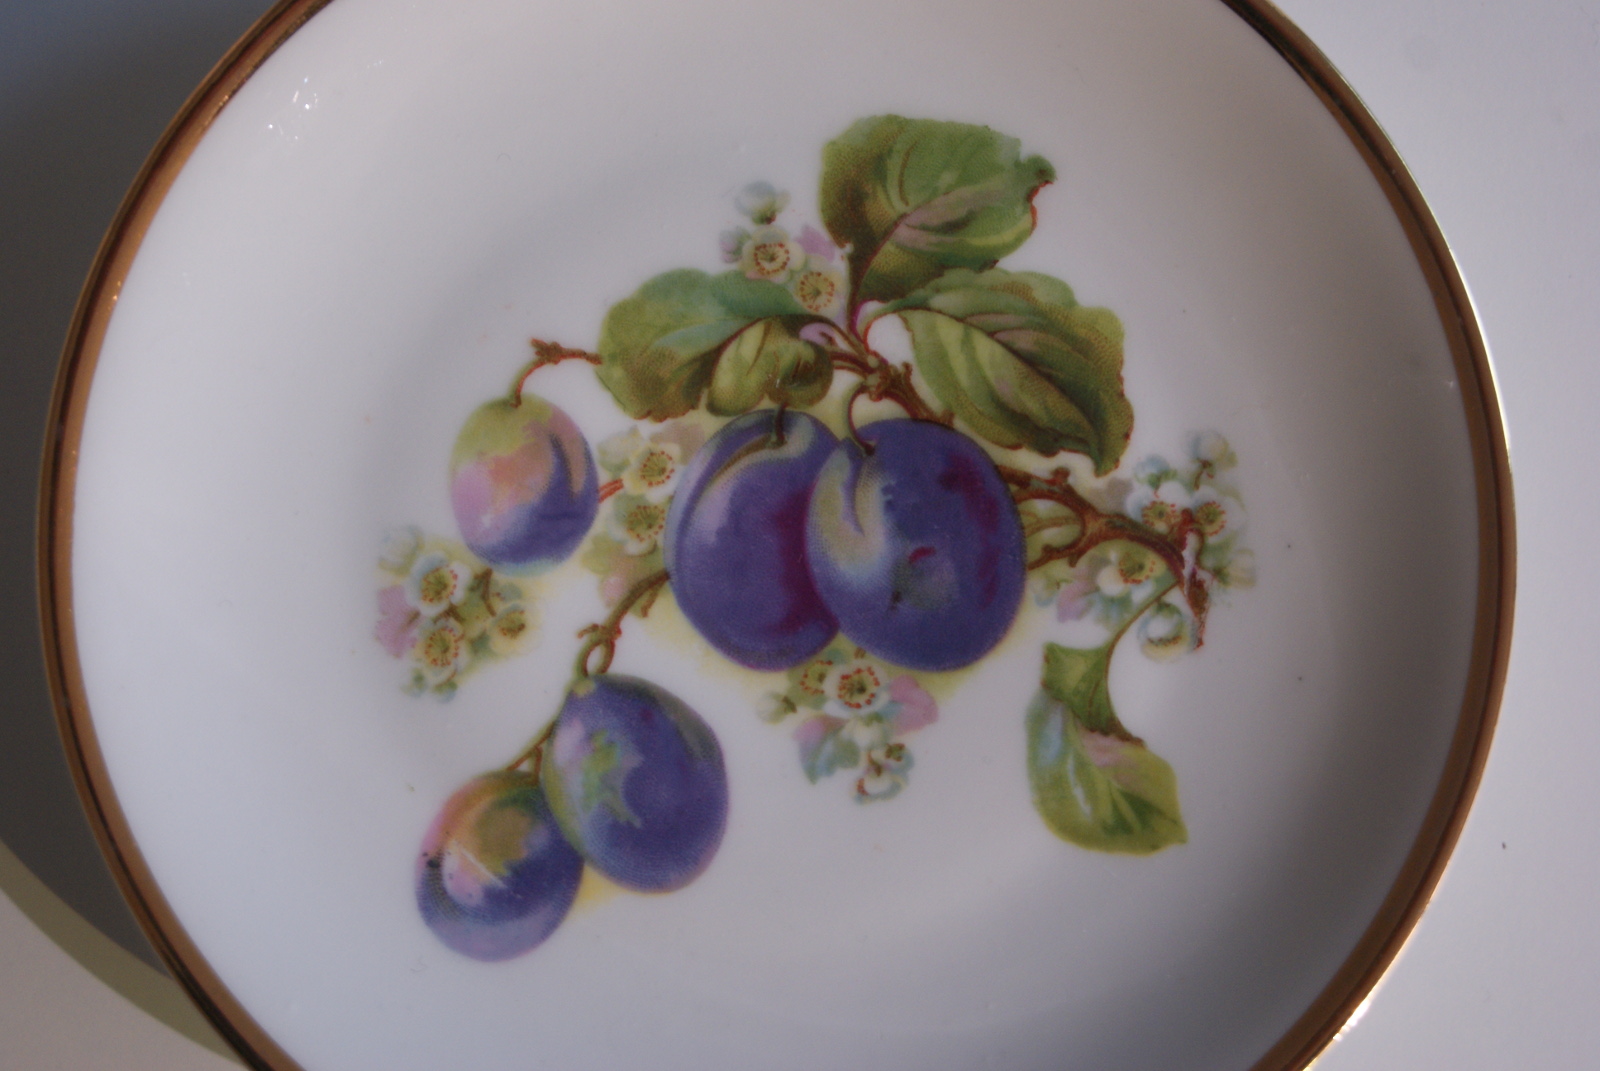 Waldenburg - Altwasser plate with plums 1927 and 1928